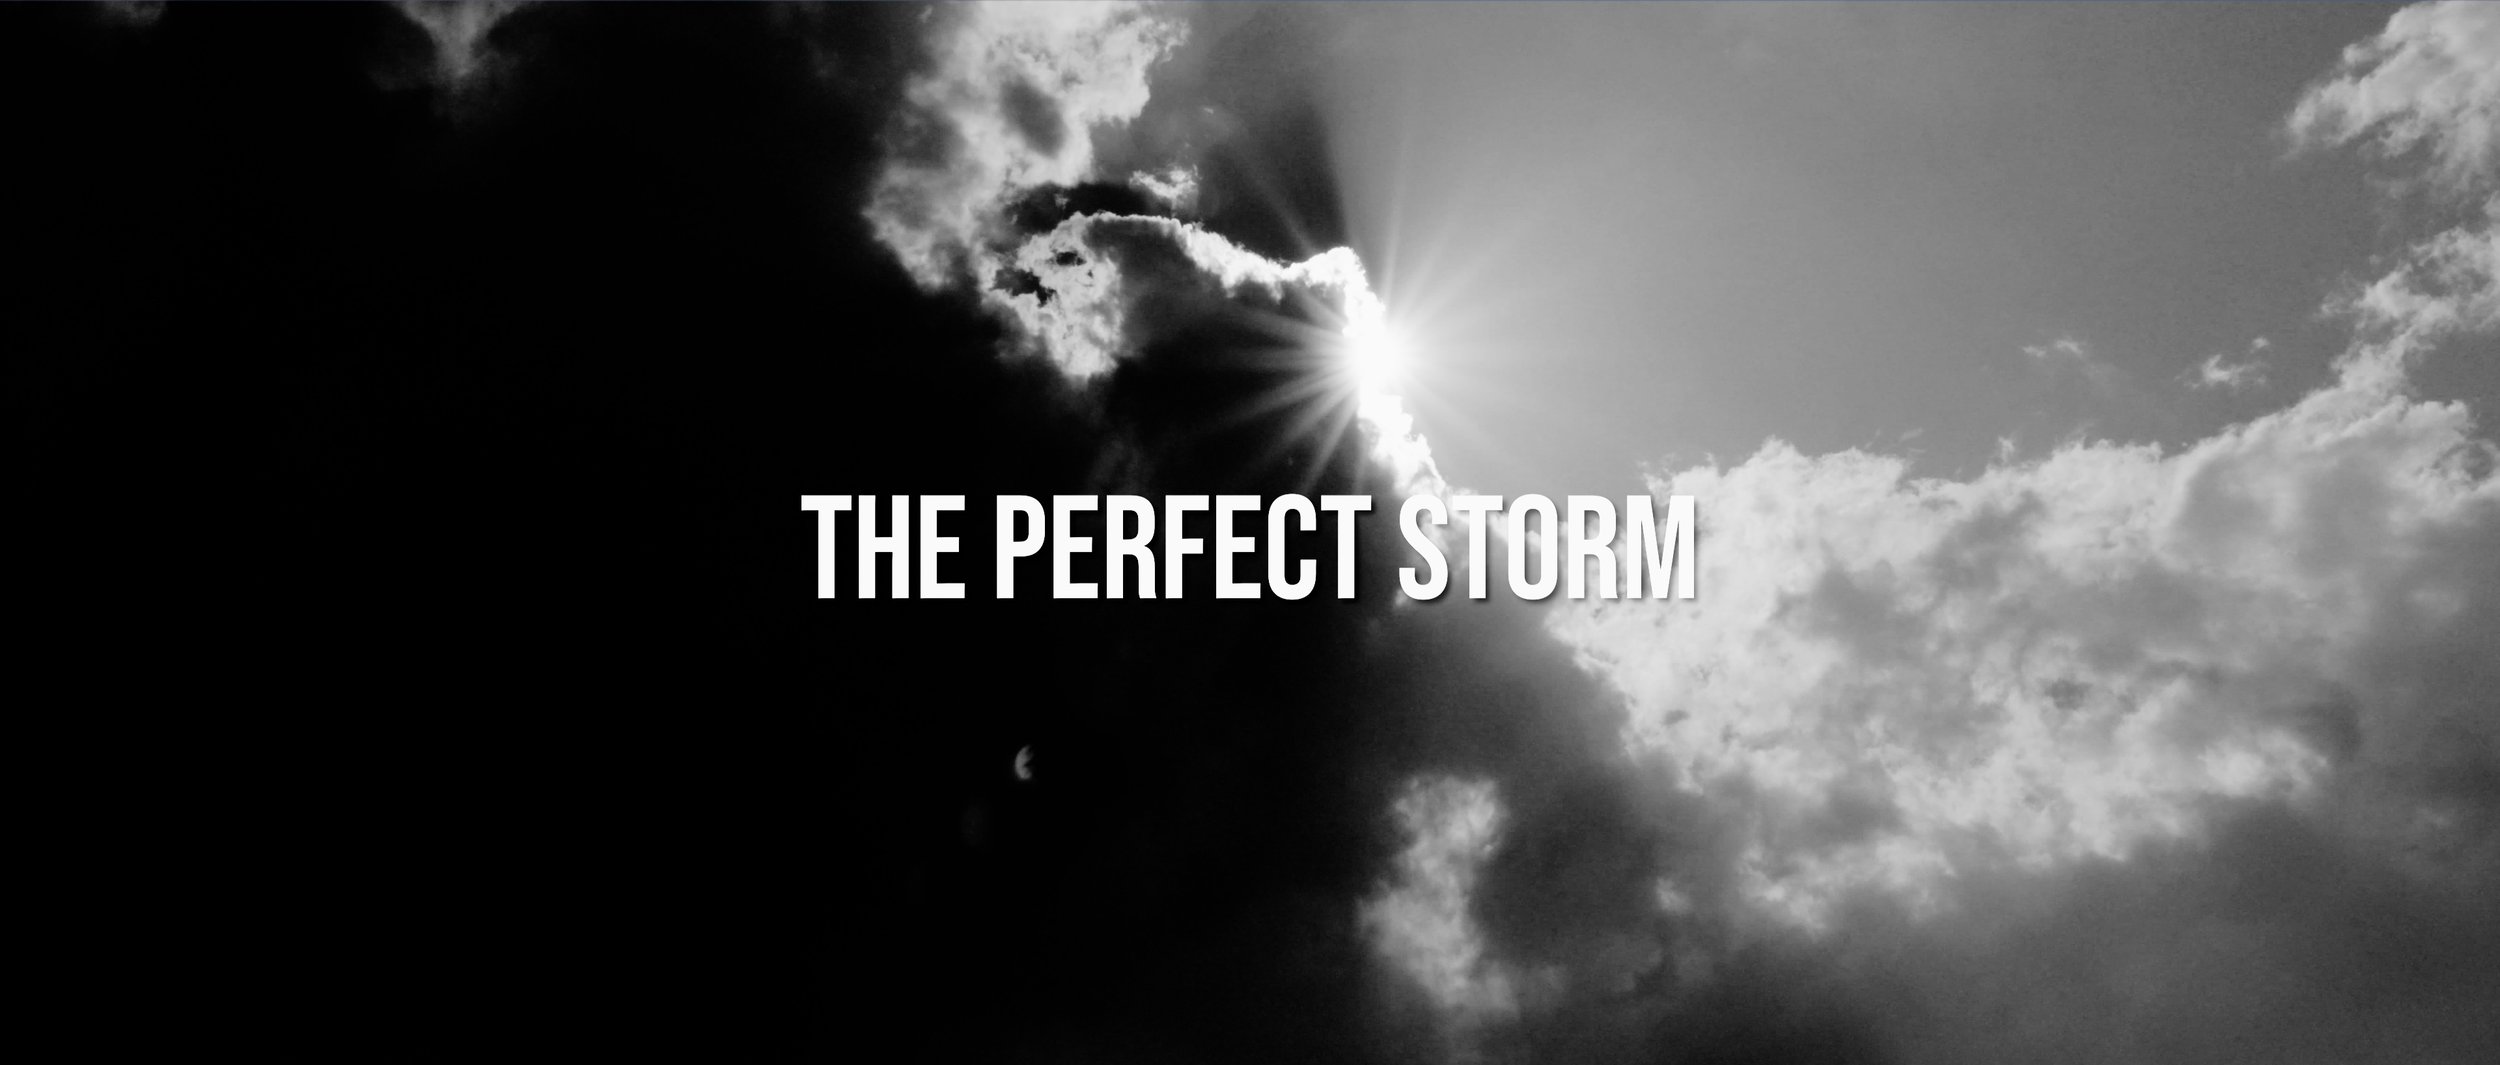 The Perfect Storm.00_02_28_13.Still013.jpg